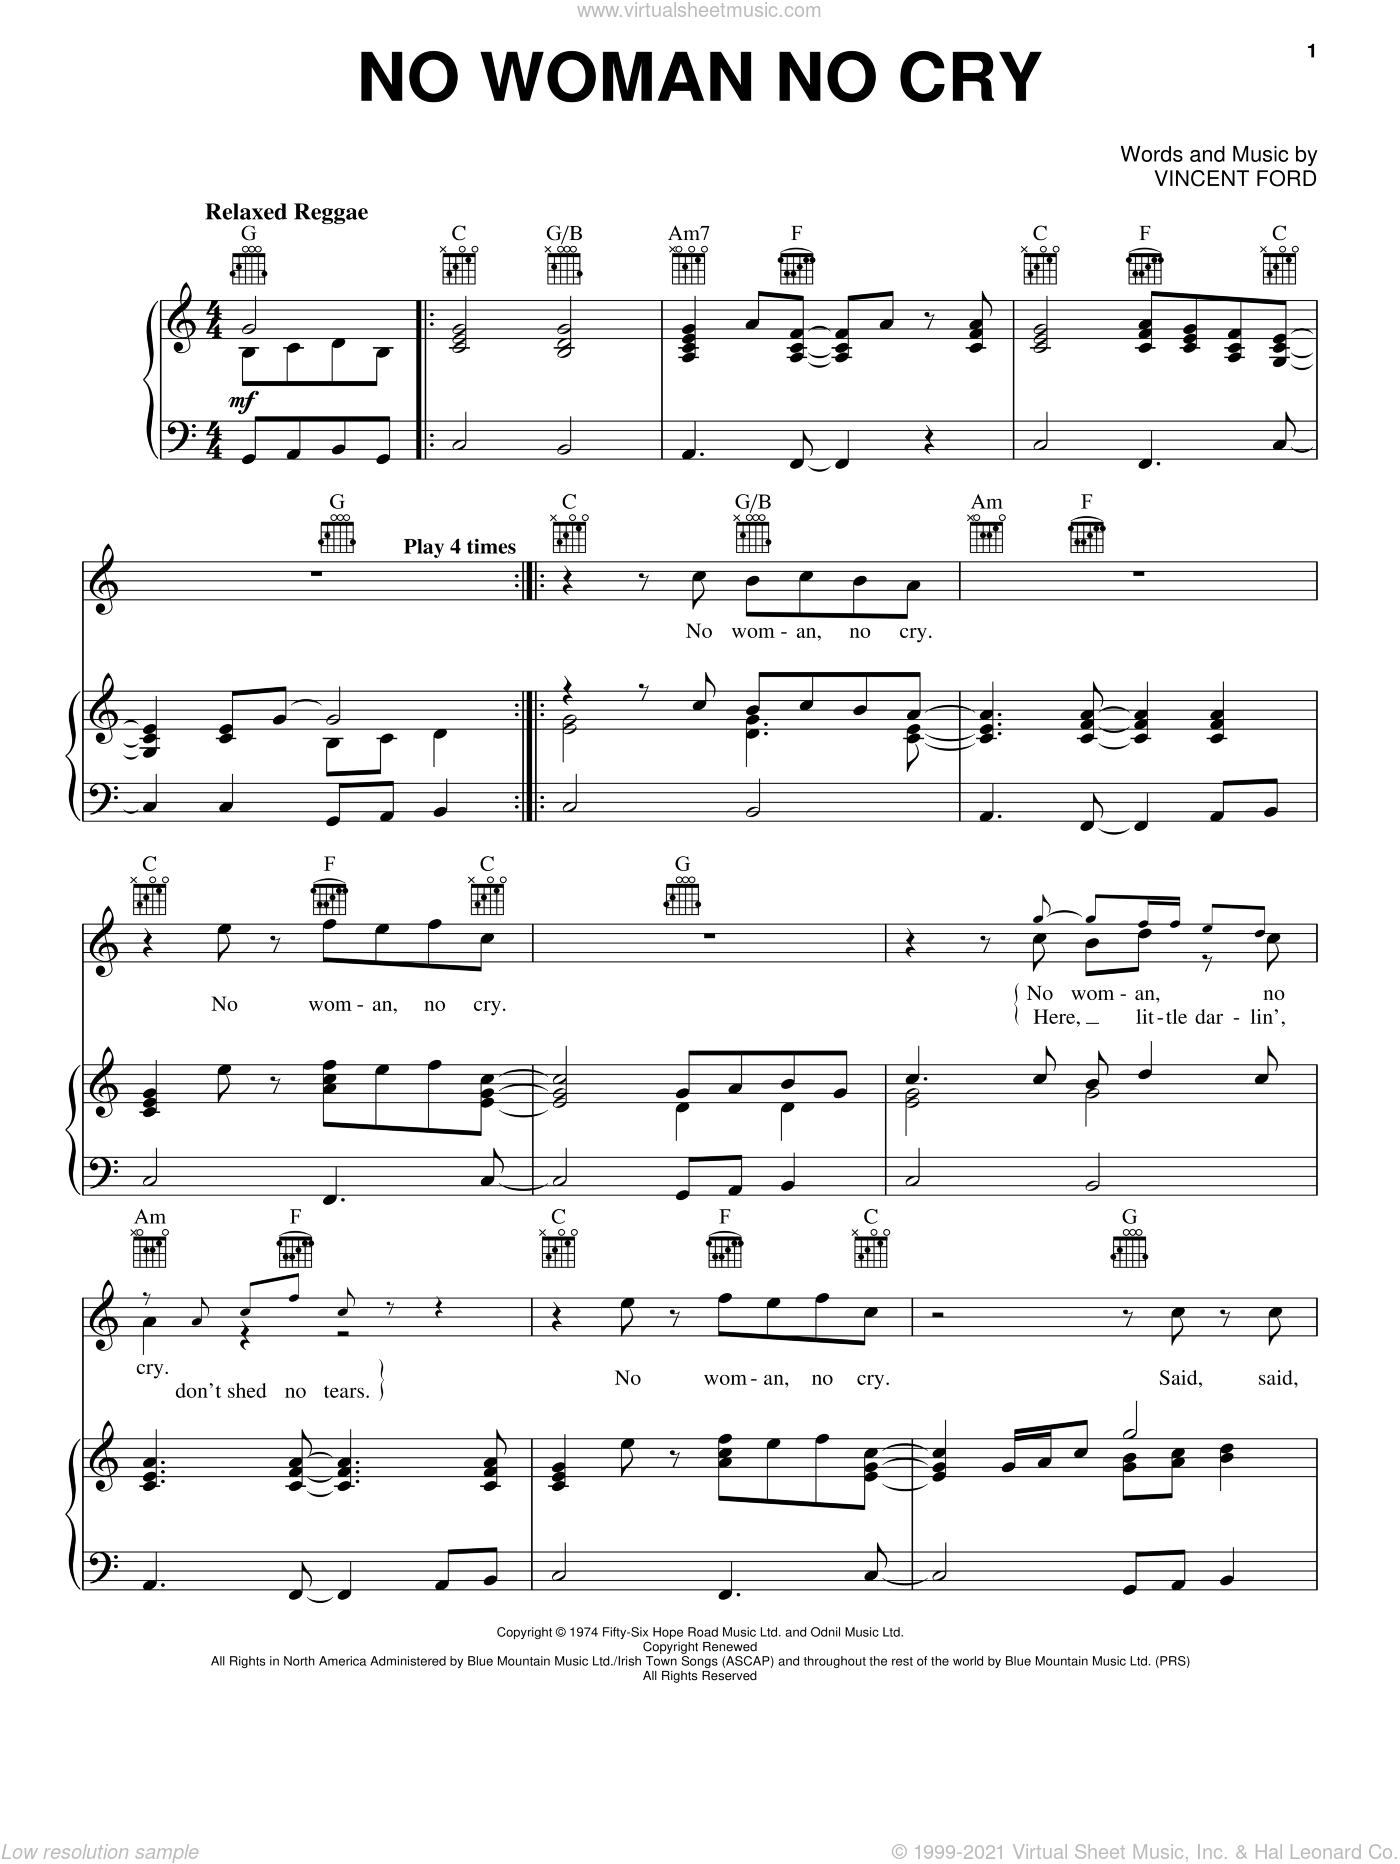 No Woman, No Cry sheet music (intermediate) for piano solo (chords